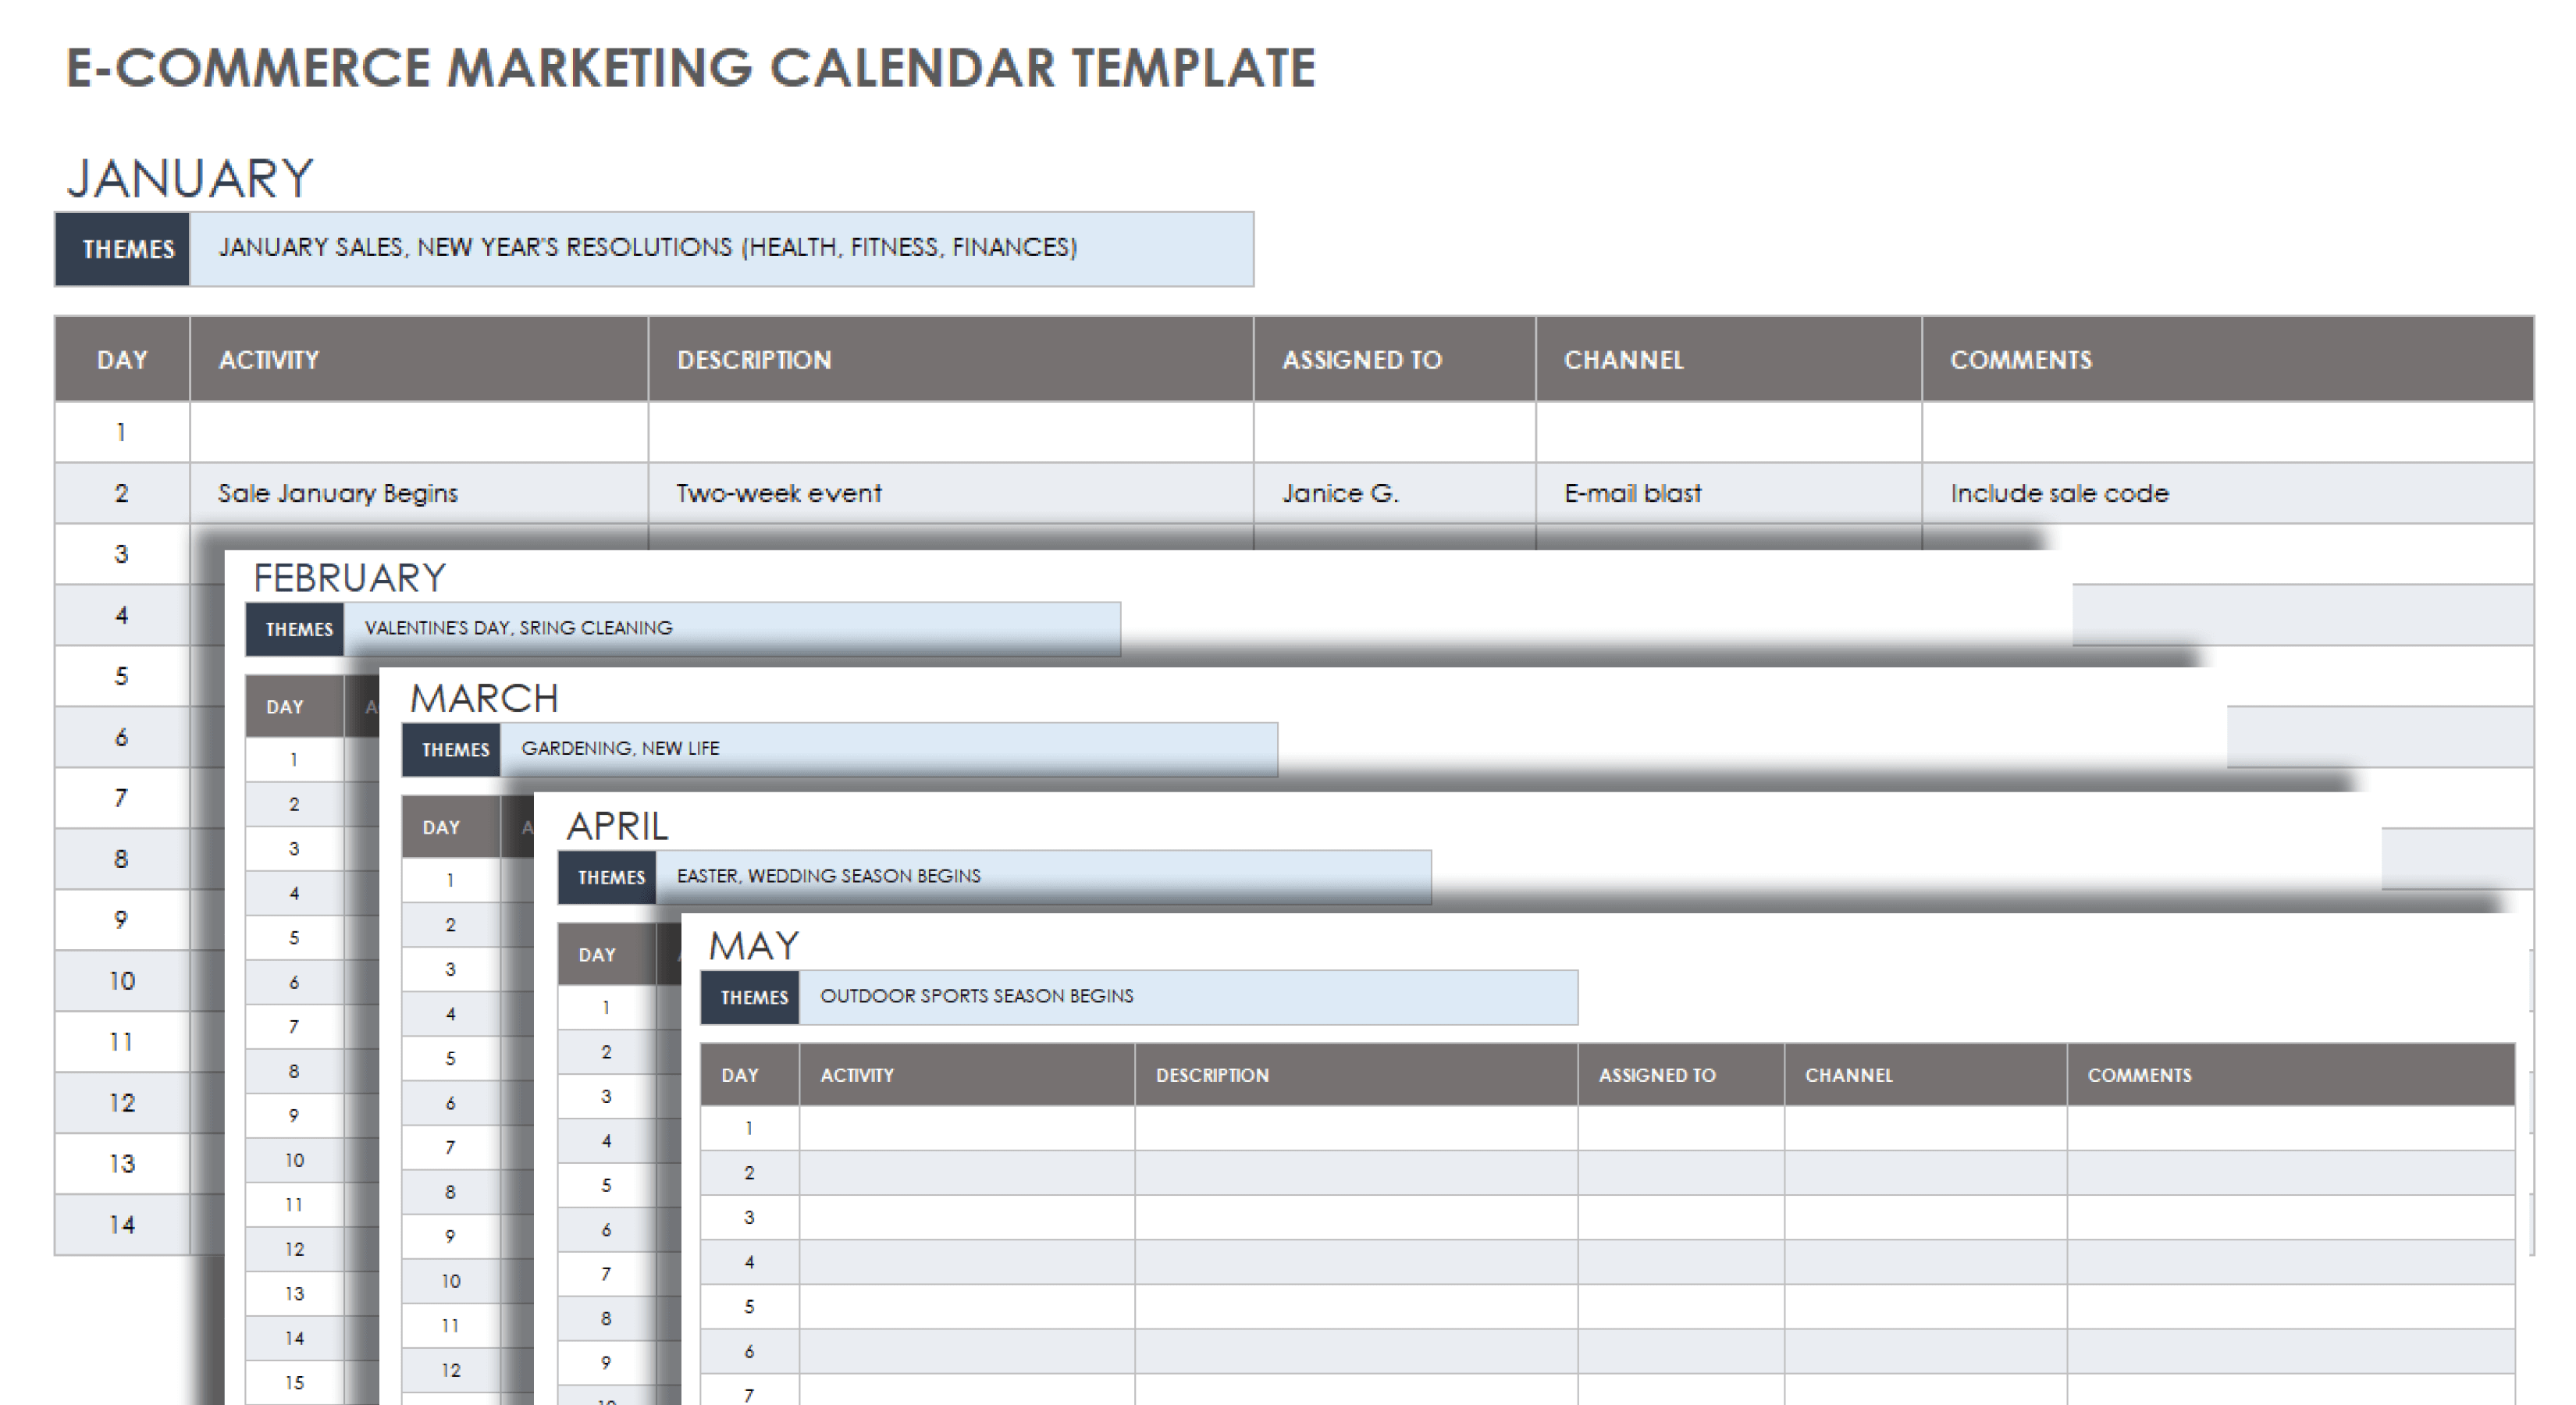 E-Commerce Marketing Calendar Template